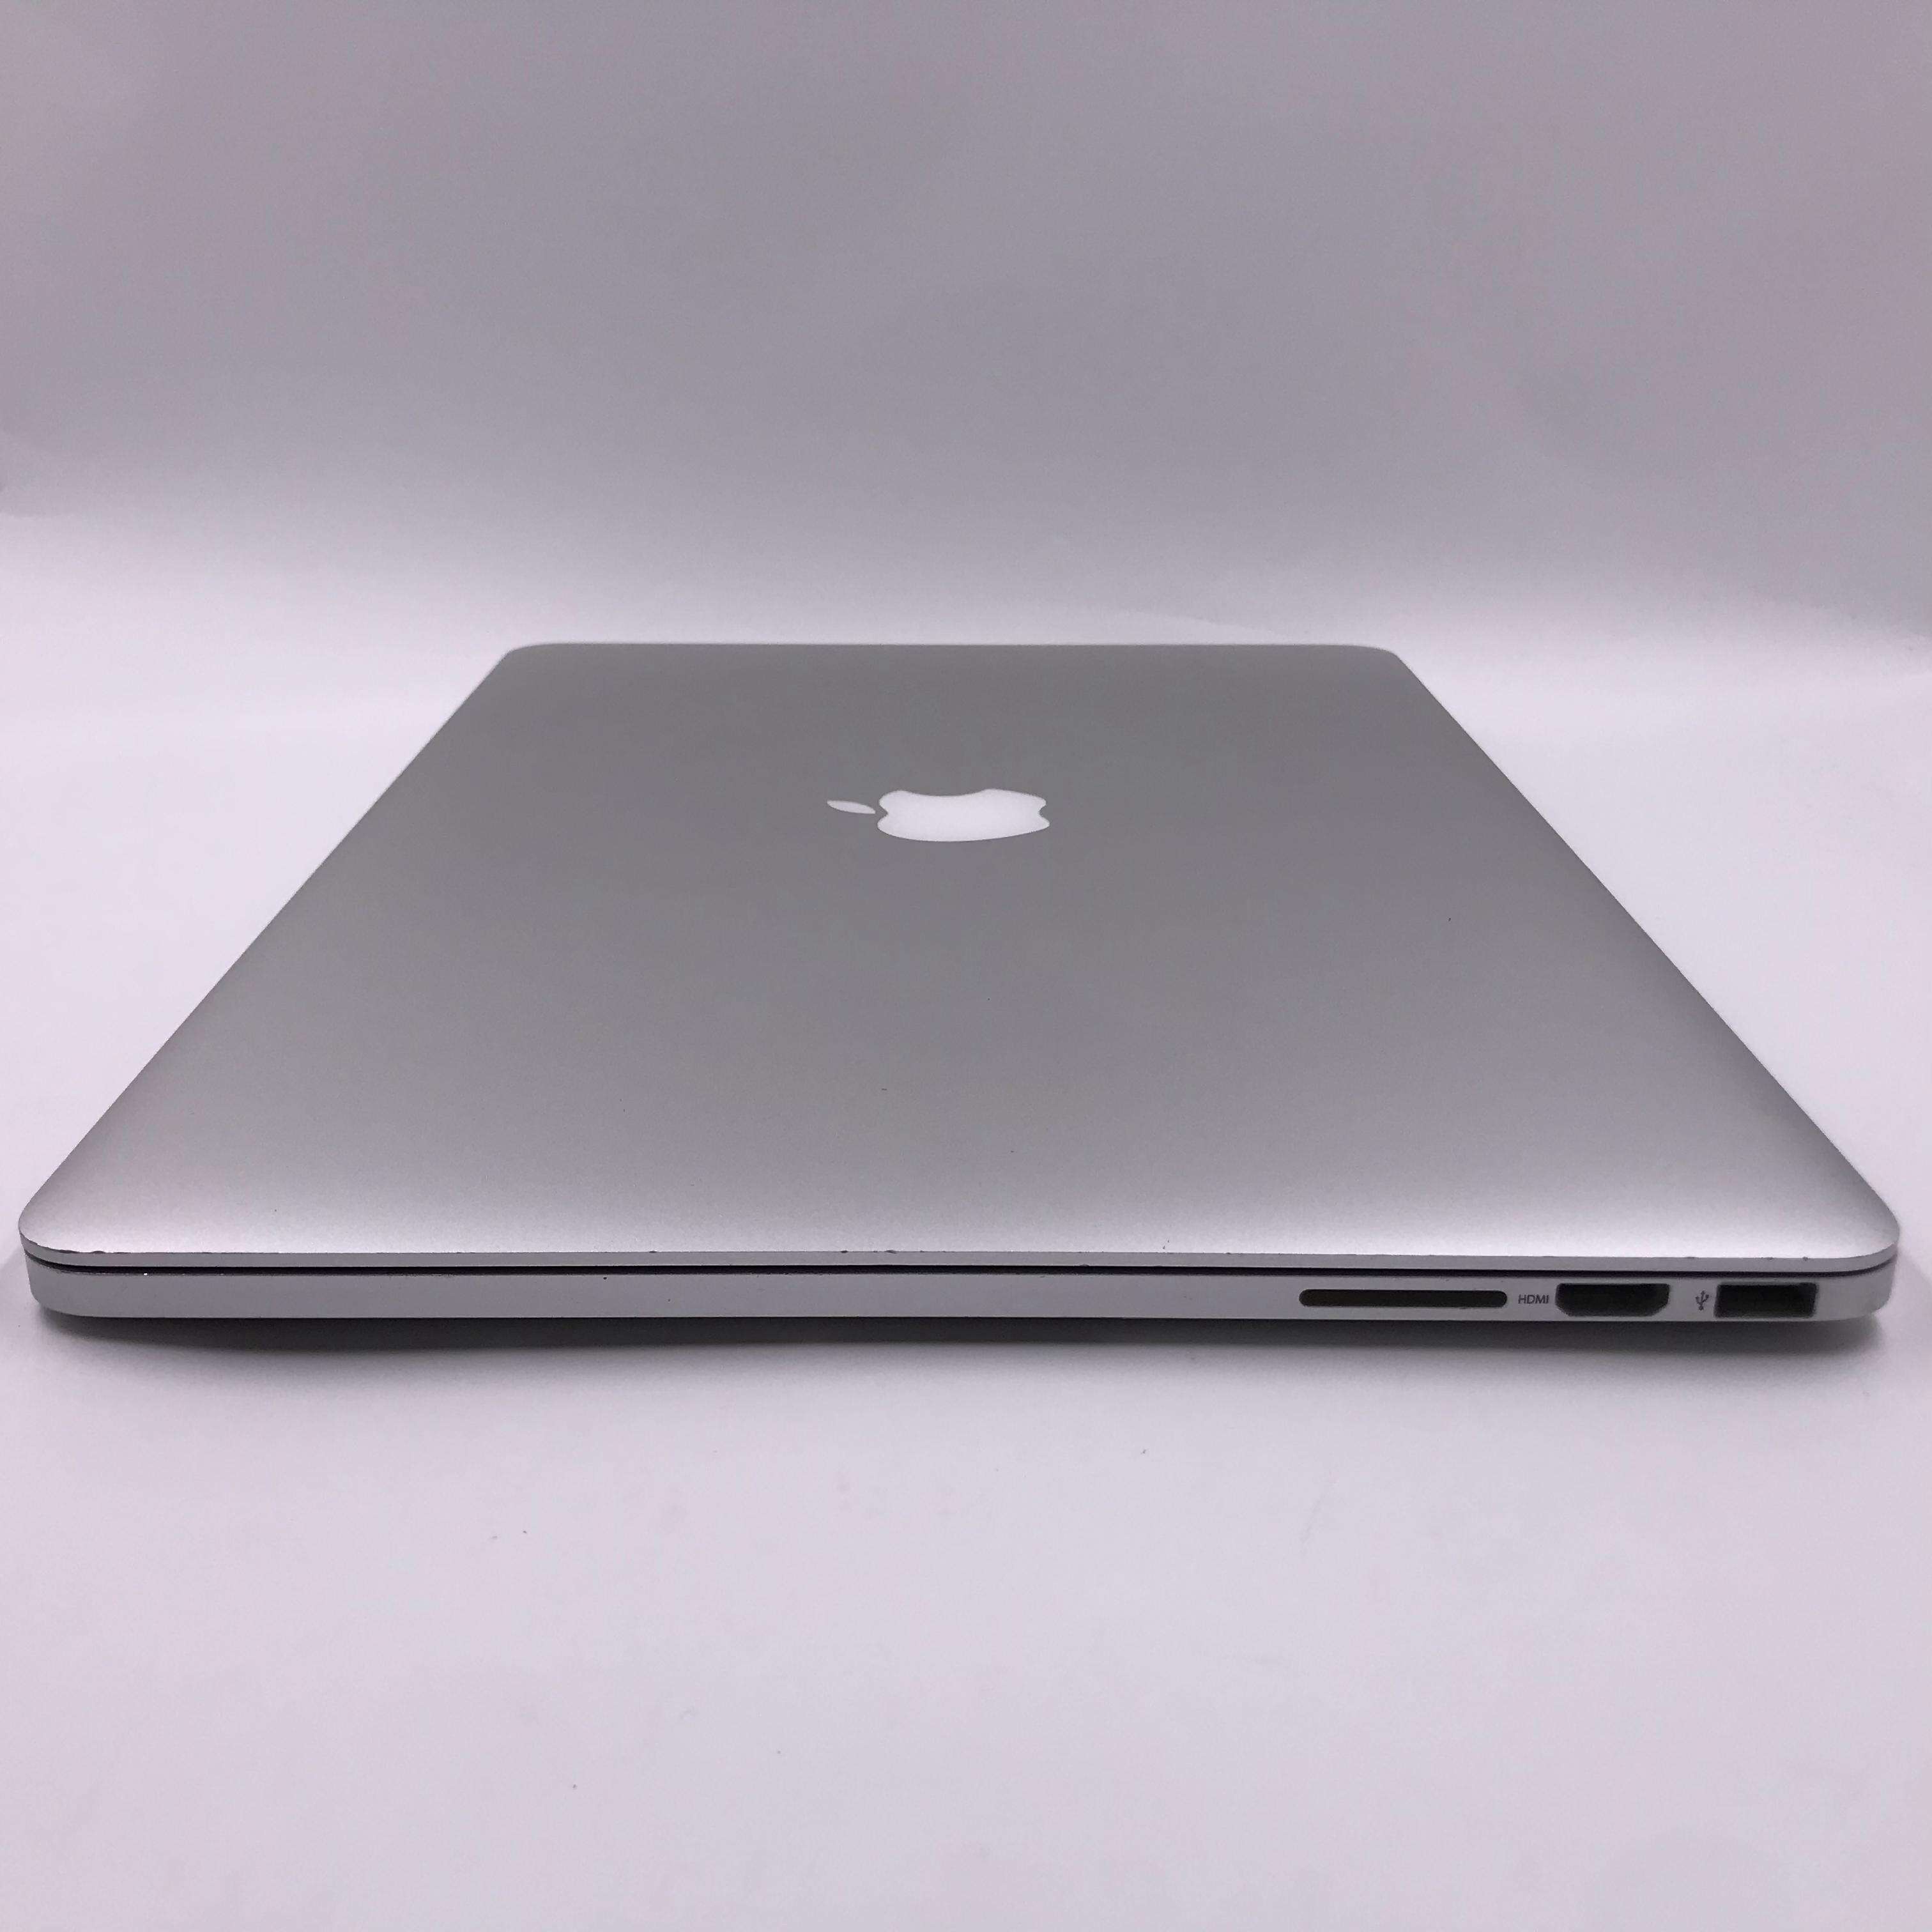 MacBook Pro (15",2015) 硬盘_512G/CPU_2.5 GHz Intel Core i7/显卡_AMD Radeon R9 M370X+Intel GMA HD 5200 国行